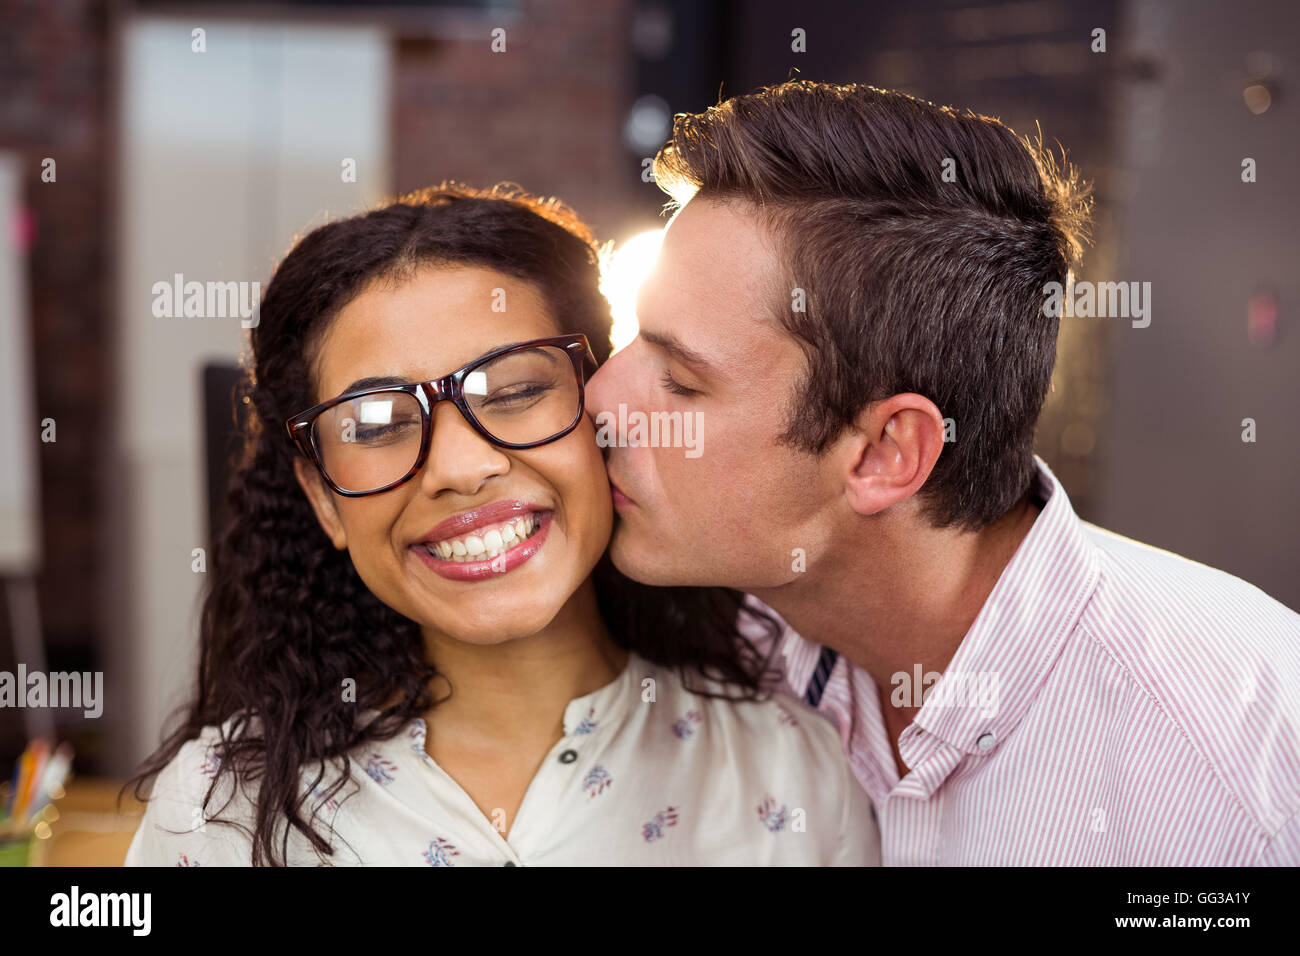 Man kissing woman on cheek Stock Photo